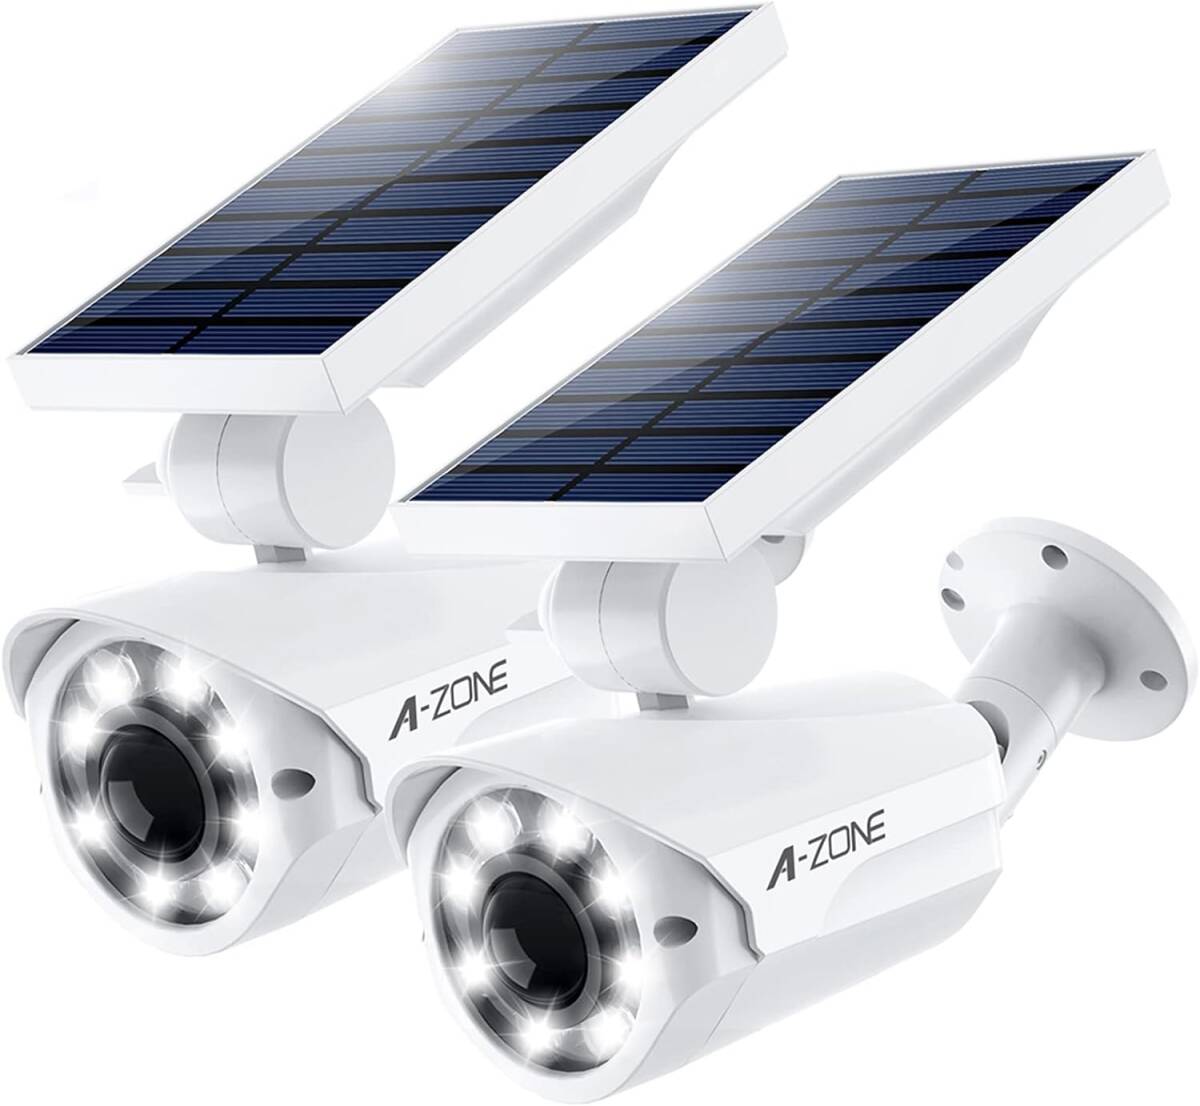 A-ZONE 2個セット屋外 ソーラーライト 人感センサーライト 防犯カメラ型 IP66防水・防塵 省エネ 太陽光充電 電源不要 ダミーカメラ 8LED 